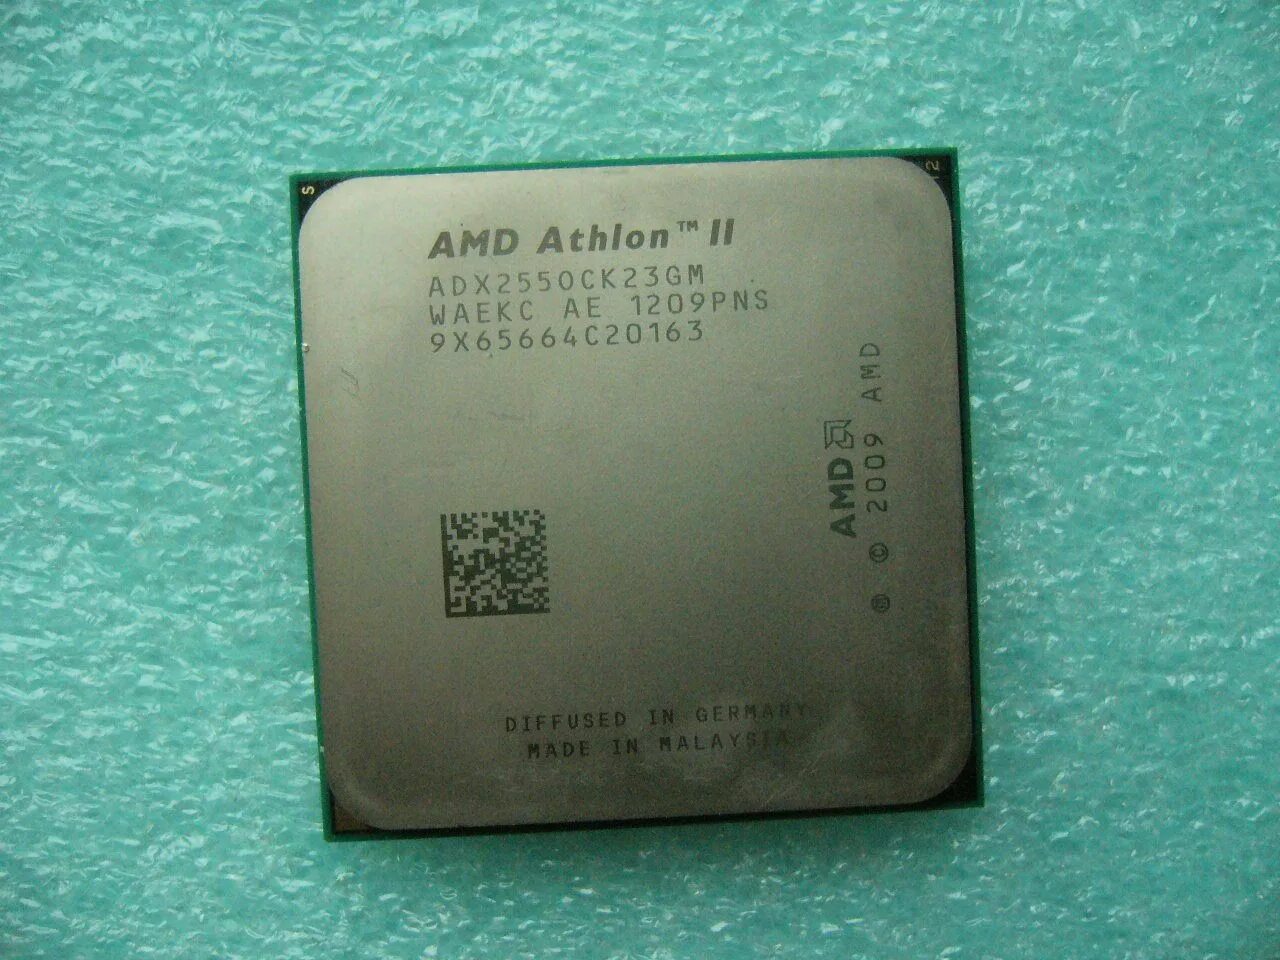 AMD Athlon 2 adxb220ck23gq. AMD Athlon II x2 215 am3, 2 x 2700 МГЦ. AMD Athlon II x2 255 am3, 2 x 3100 МГЦ. Процессор CPU x2 AMD Athlon 2 x2 245.